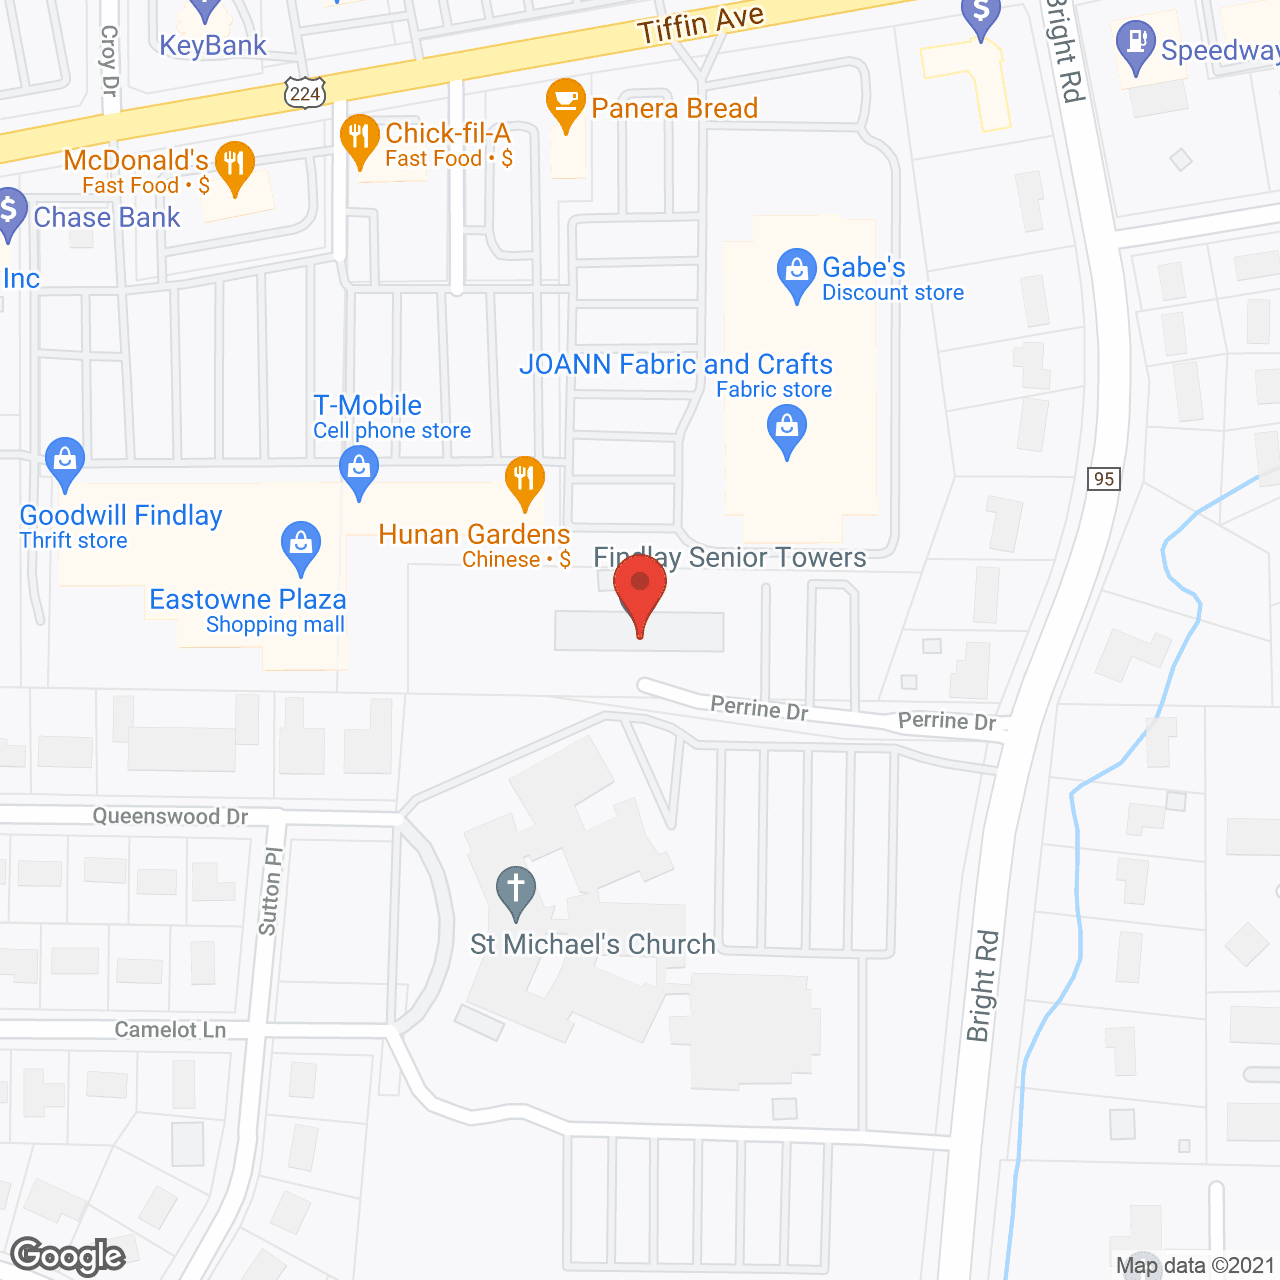 Senior Towers Ltd Inc in google map